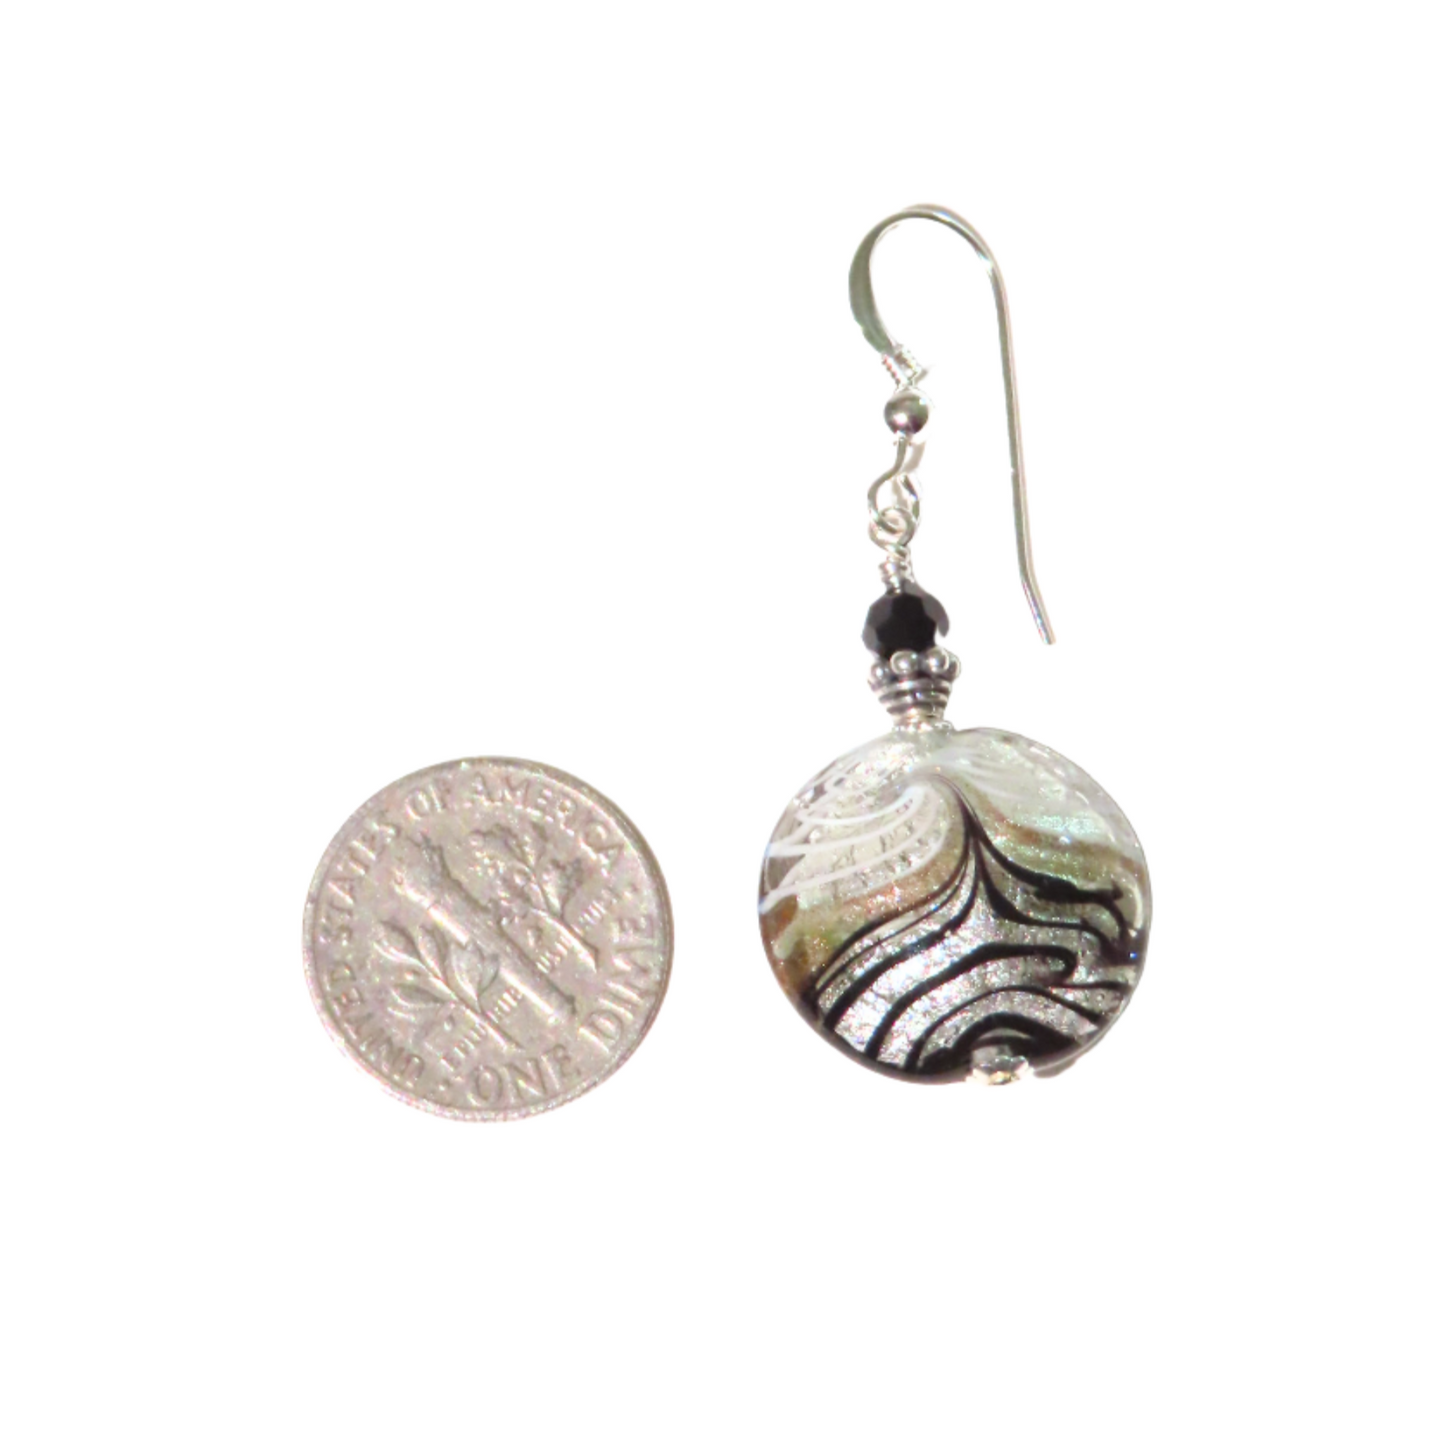 a pair of earrings handmade with Italian Murano glass beads